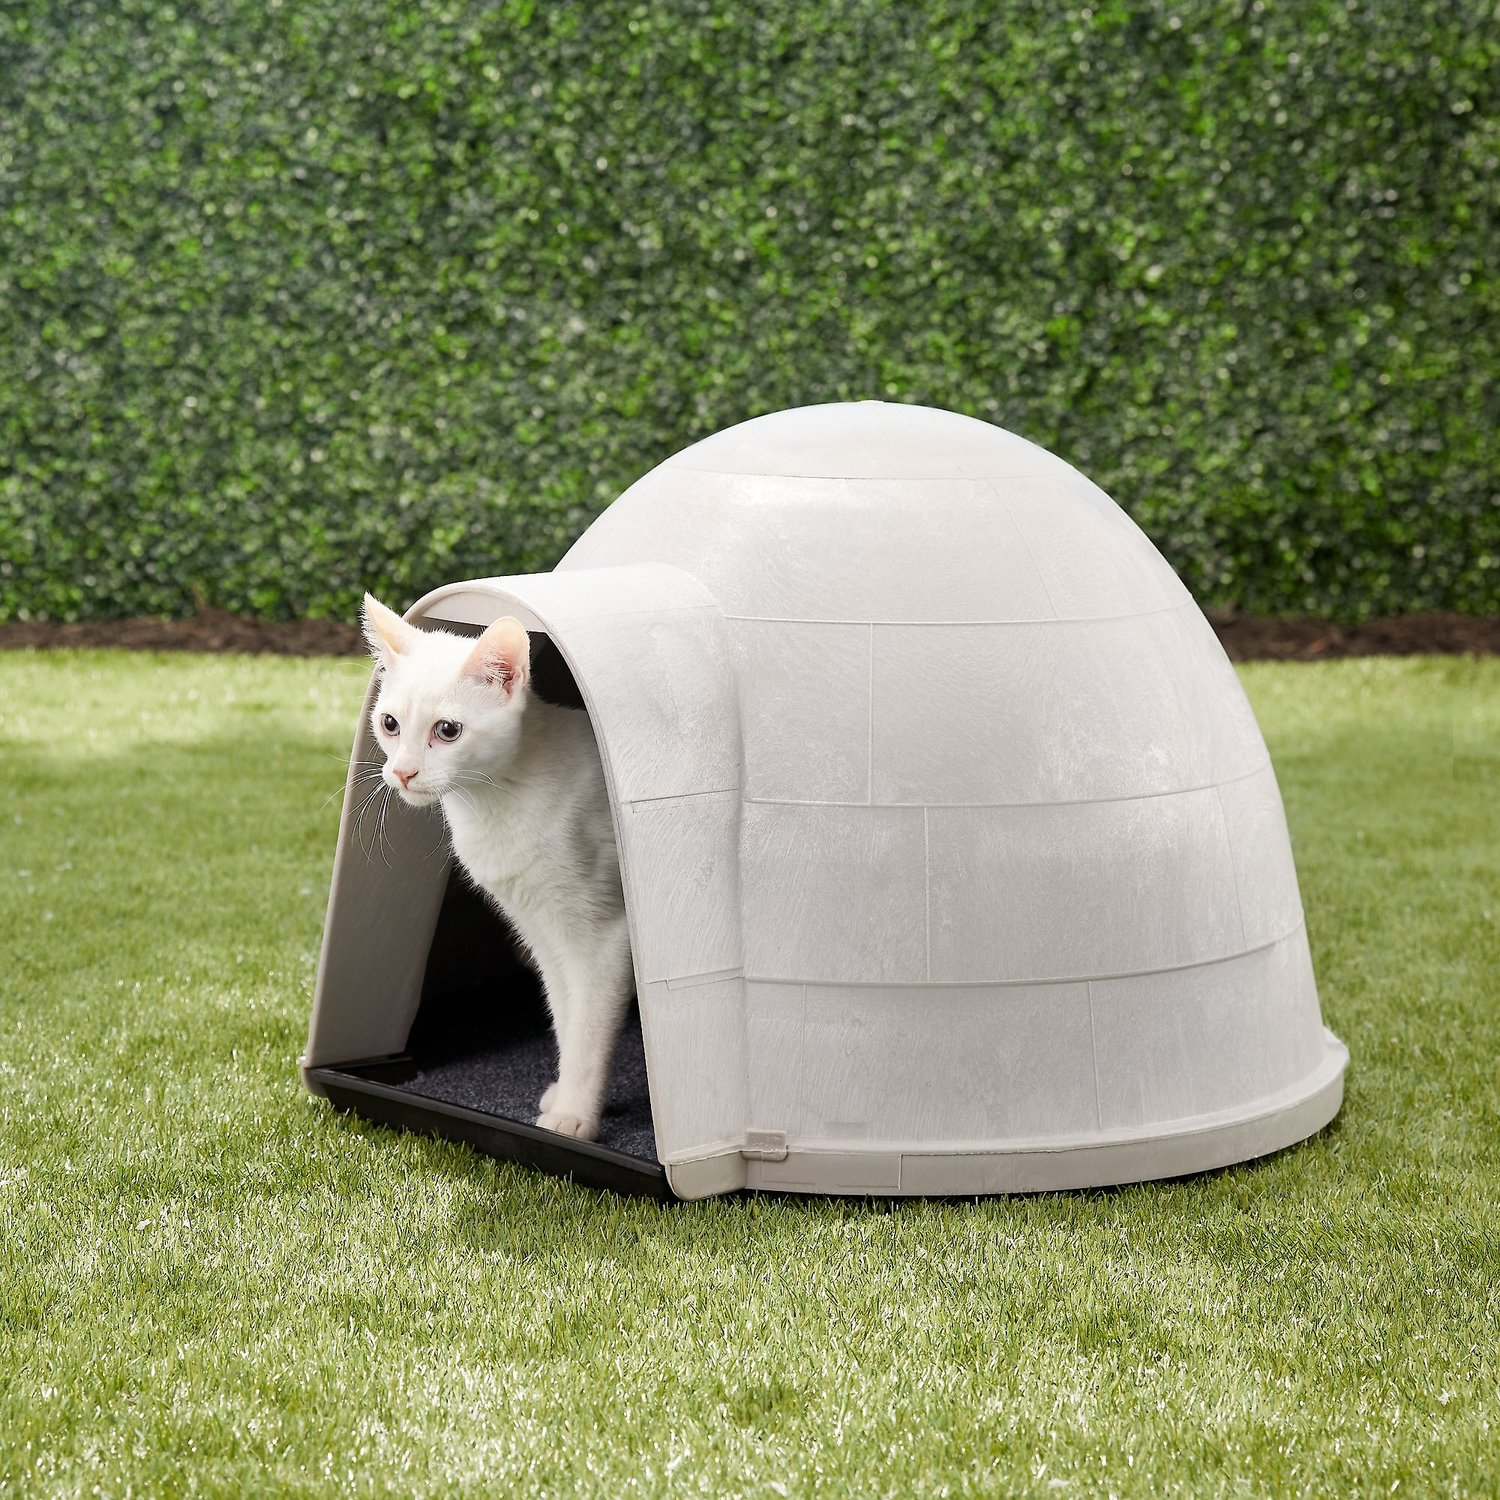 Petmate Kitty Kat Condo Outdoor Cat, Cat Igloo Outdoor House